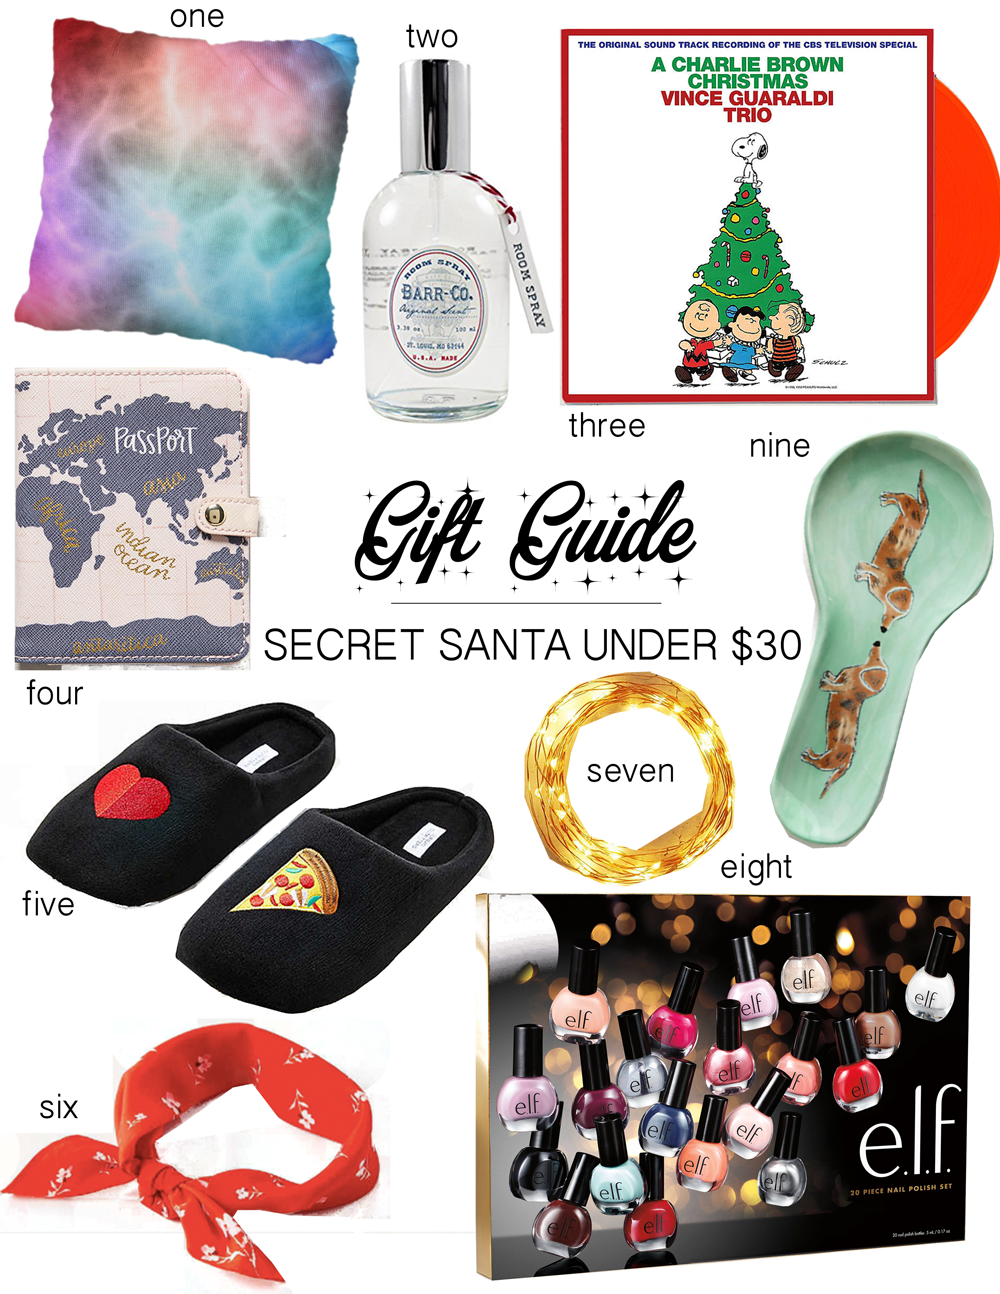 secret santa ideas for boys